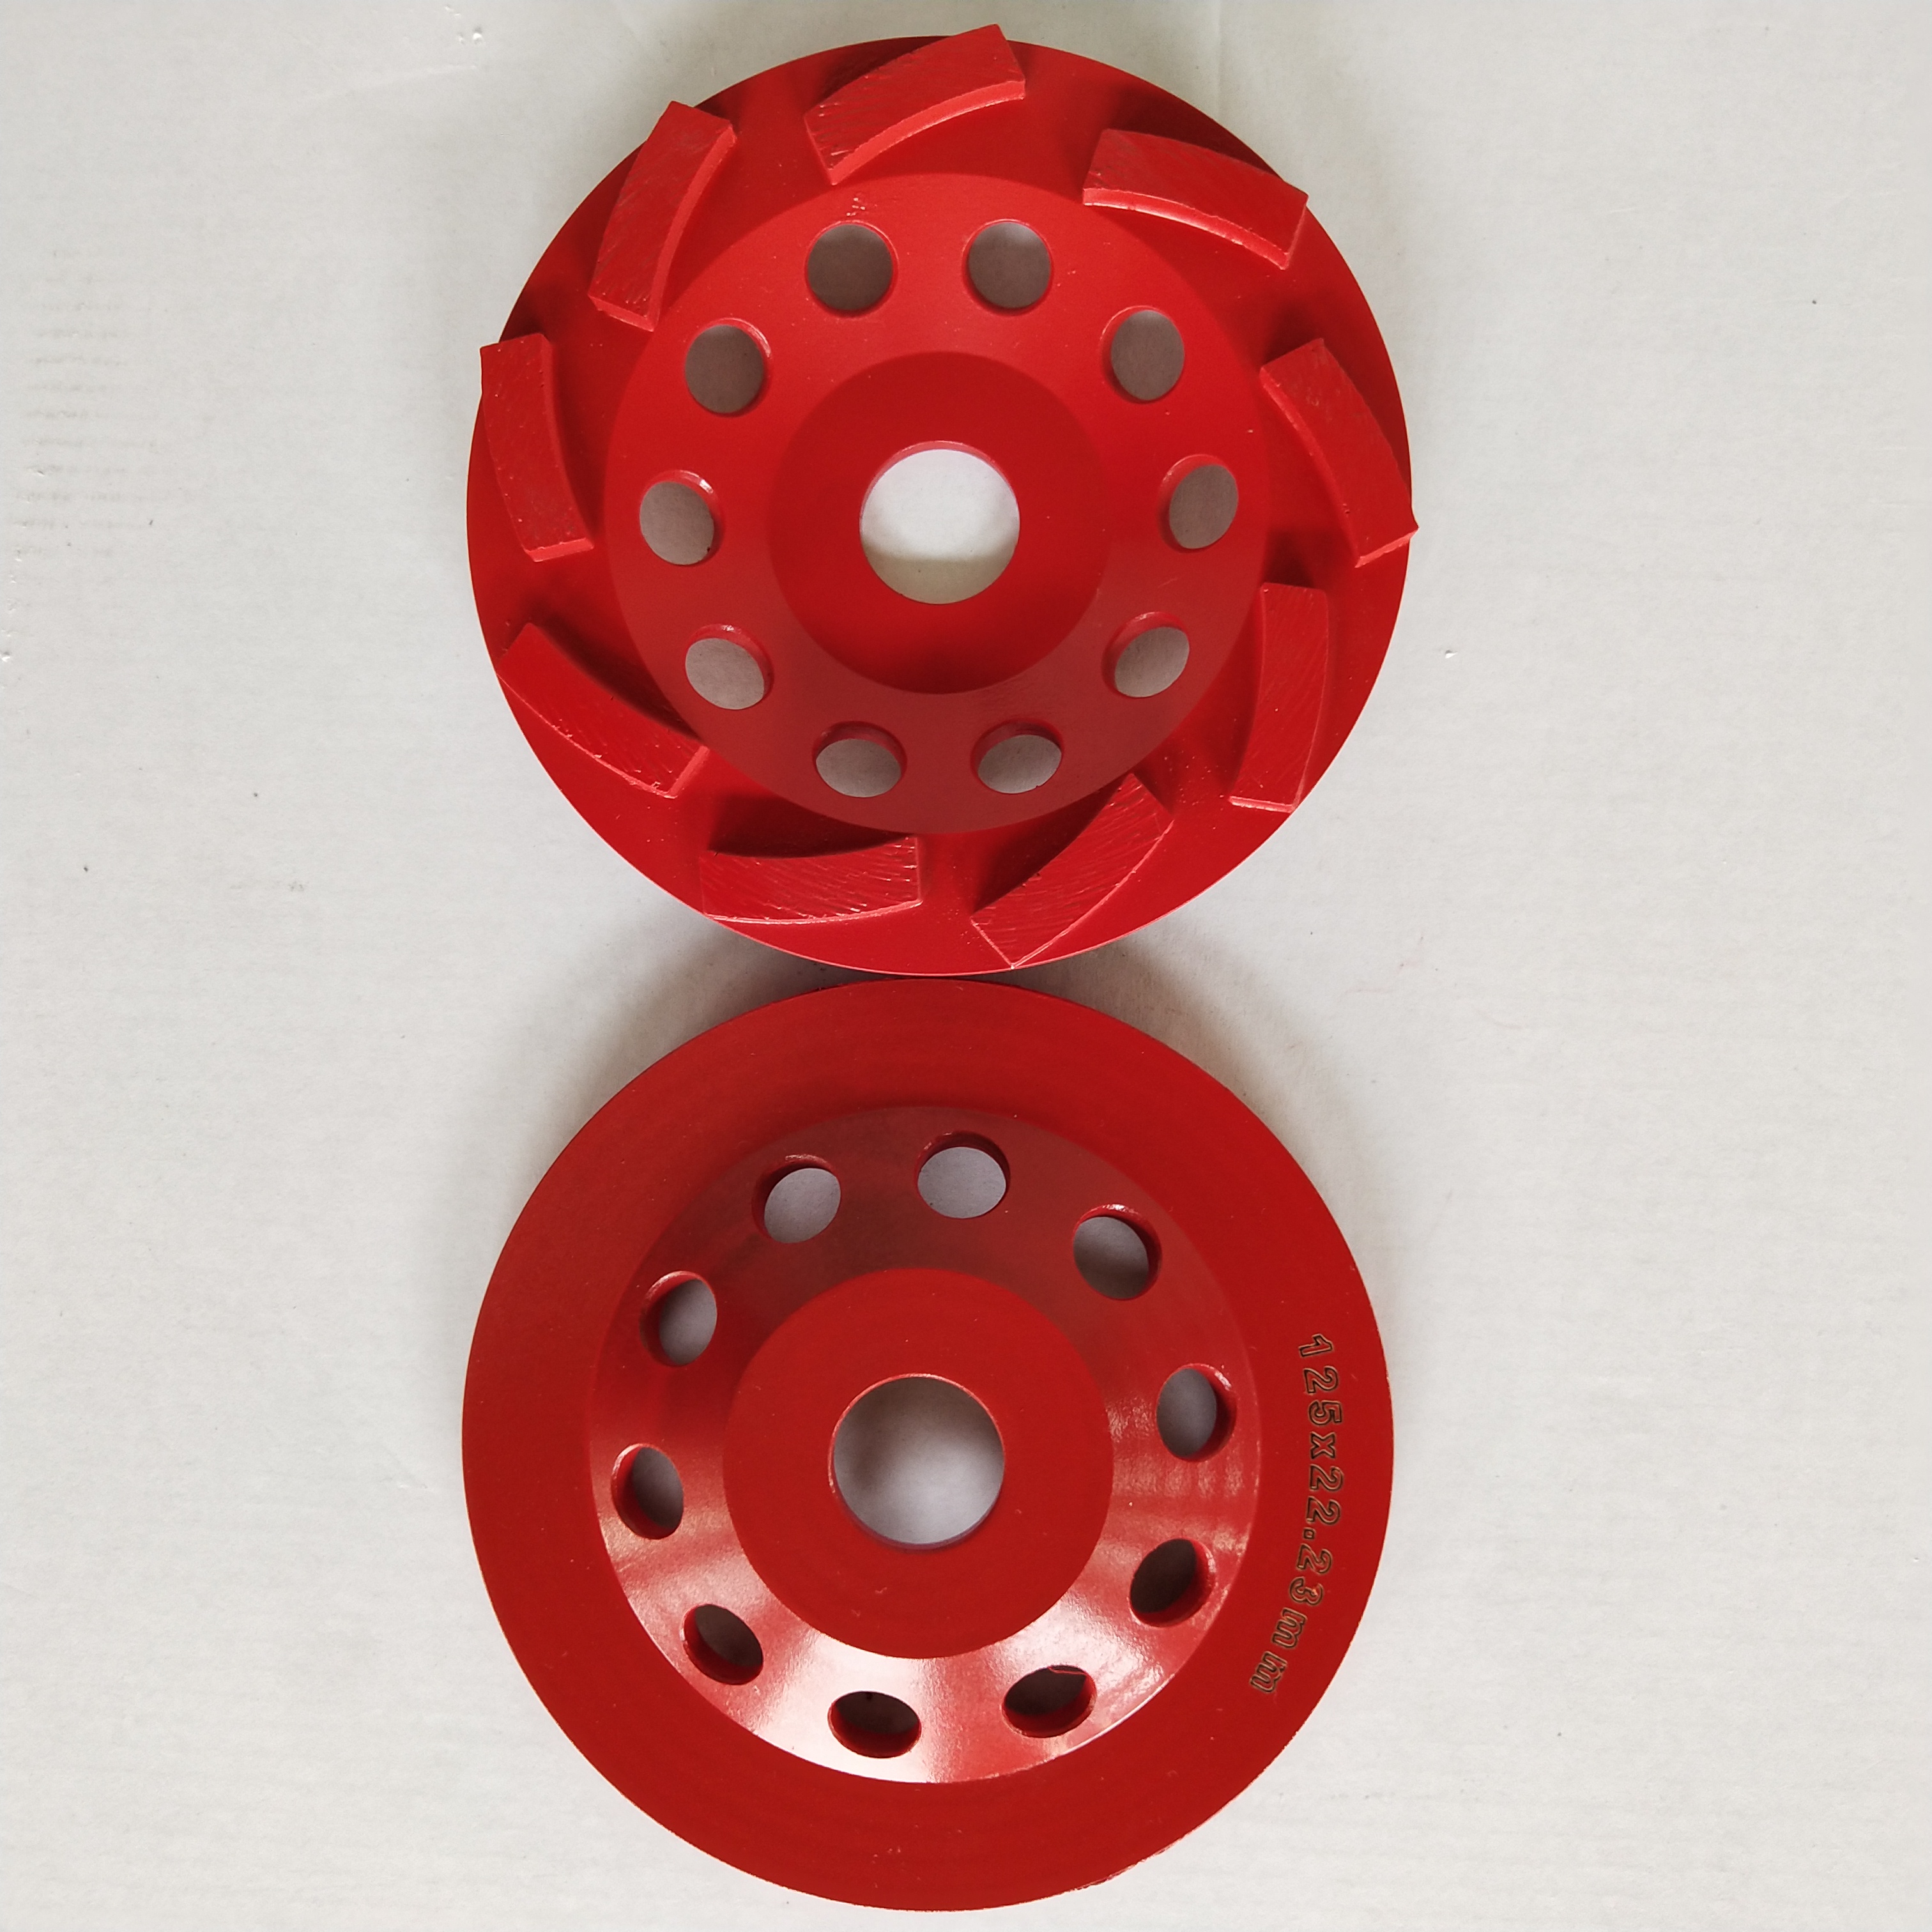 7" Diamond Abrasive Wheel for Edging Concrete Turbo Segmented Hand Grinding Cup Wheels with 24nos Segment.